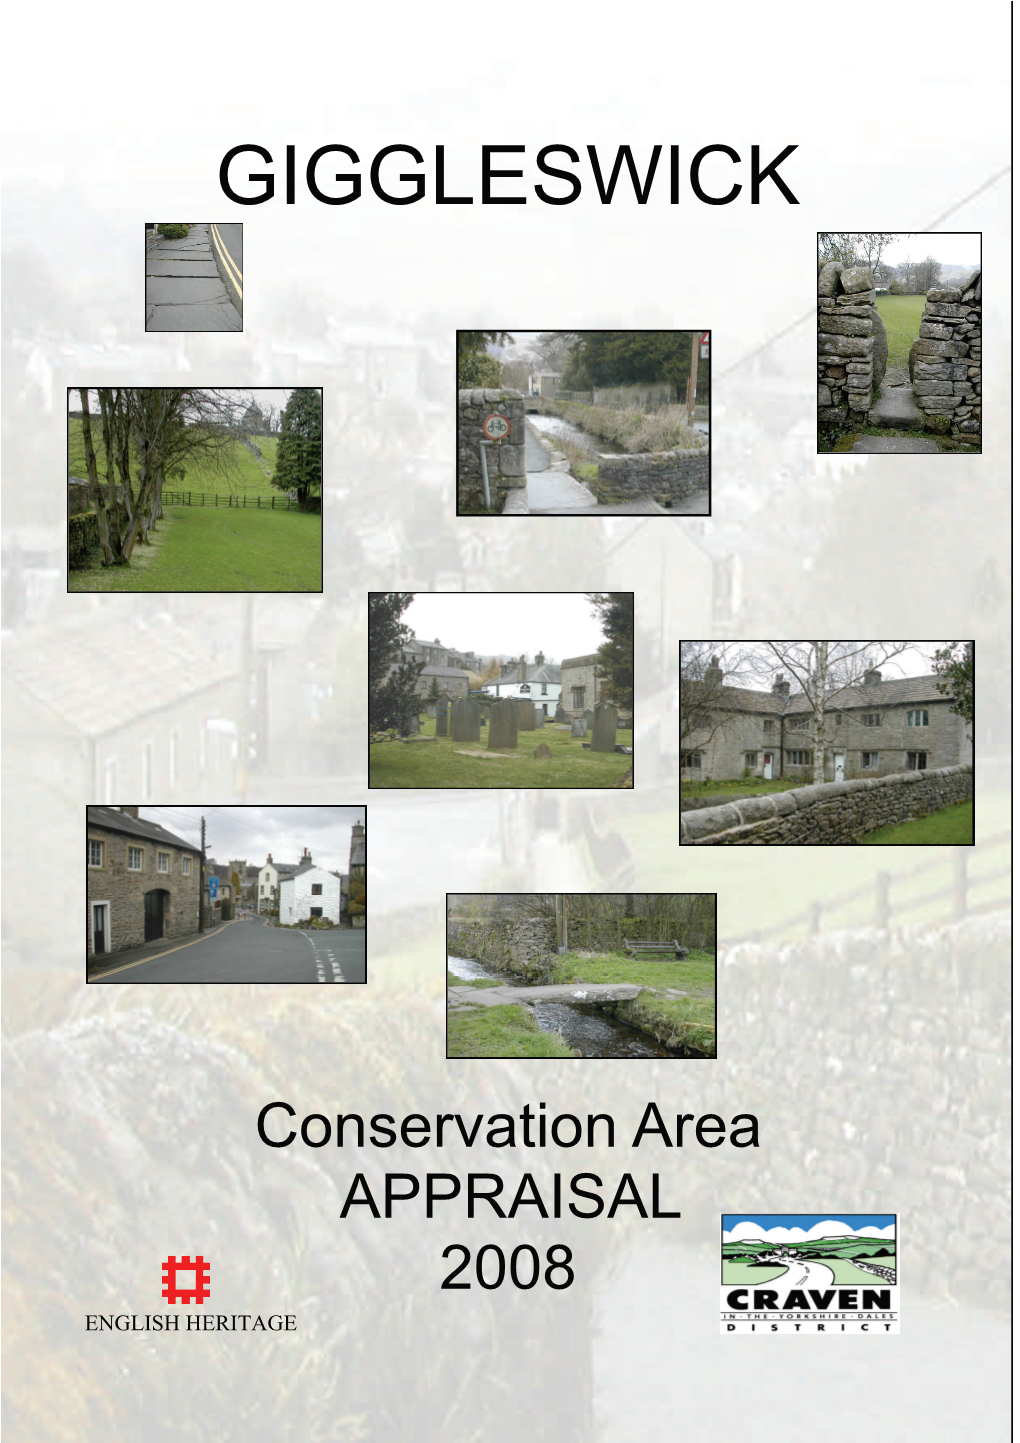 Giggleswick Conservation Area Appraisal 2008